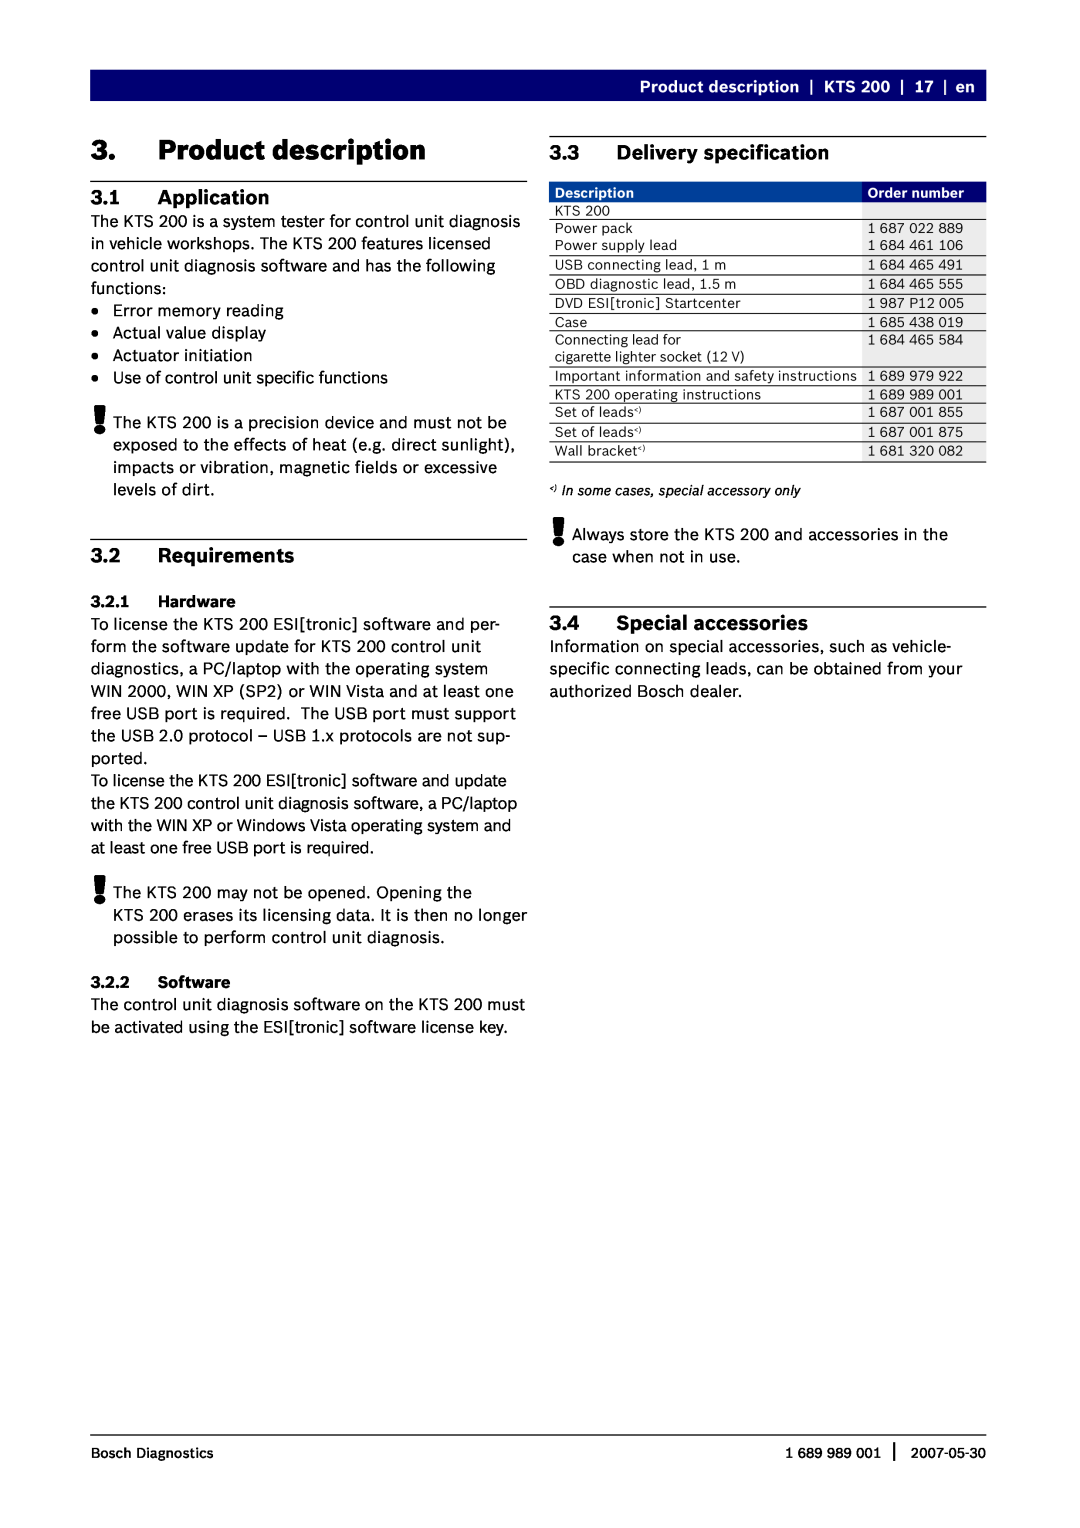 Bosch Appliances KTS 200 instruction manual Product description, 3.1Application, 3.2Requirements, Delivery specification 